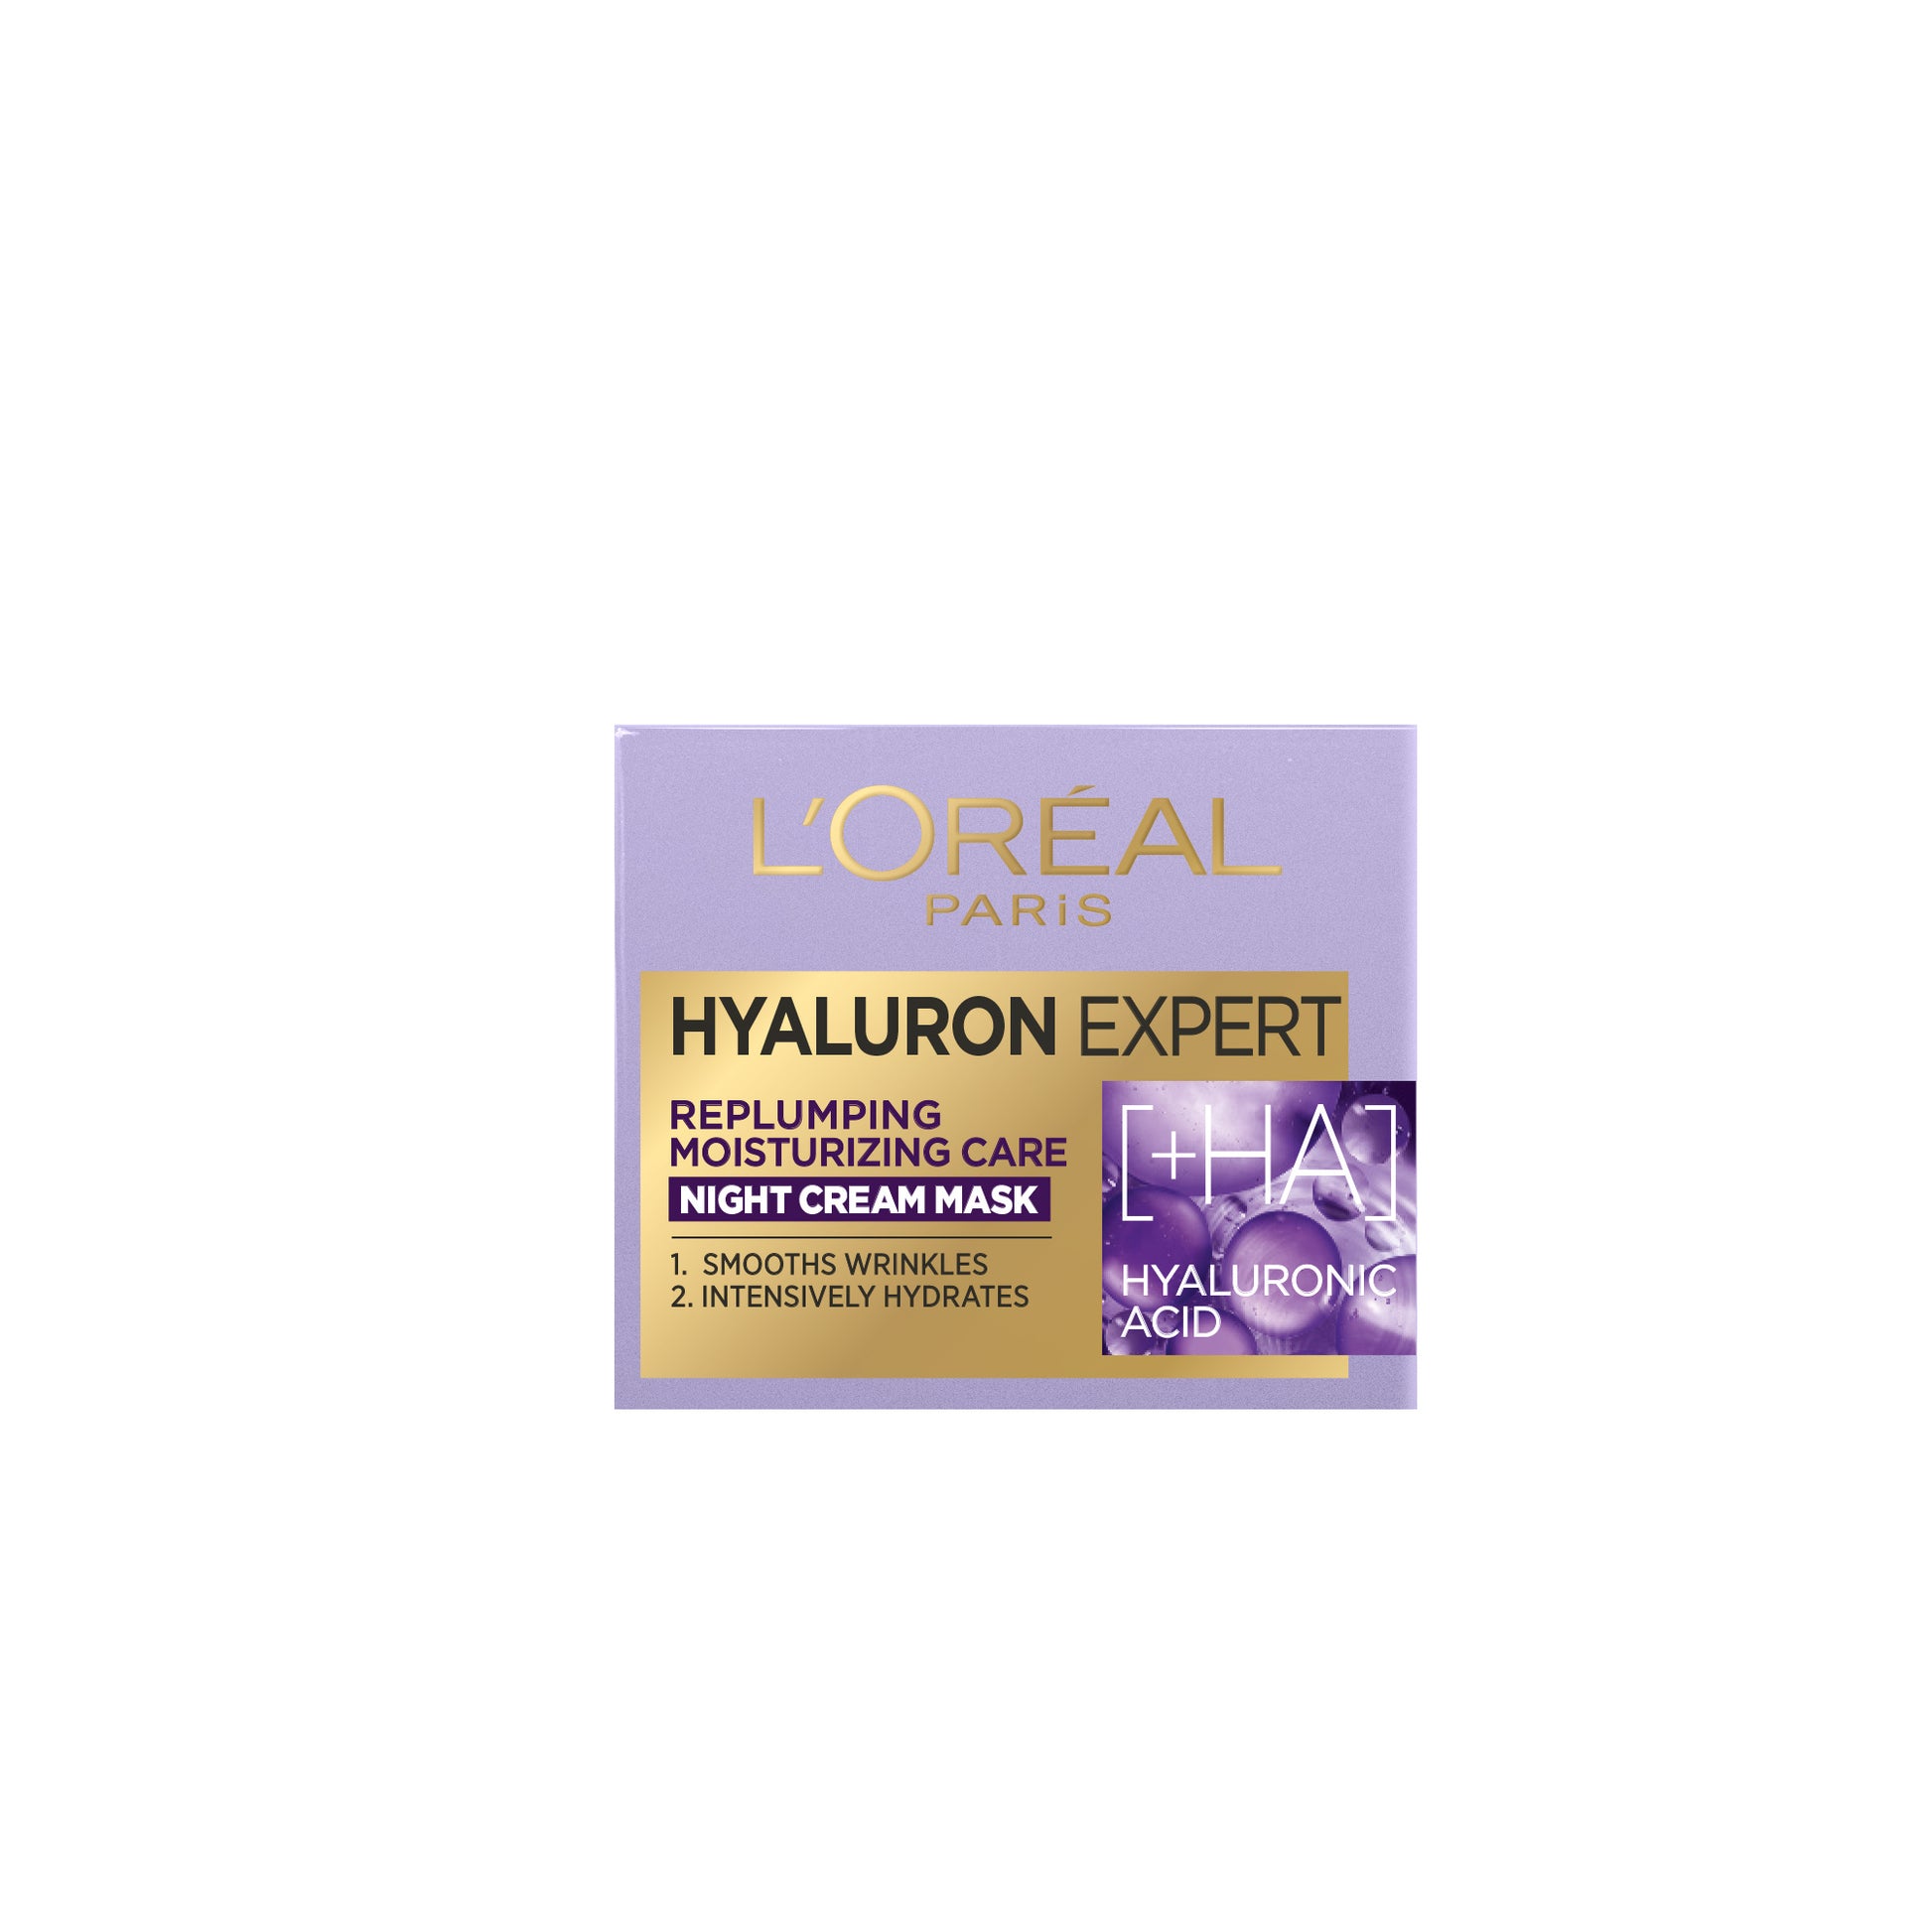 L'oreal paris hyaluron expert replumping moisturizing night cream mask 50 ml